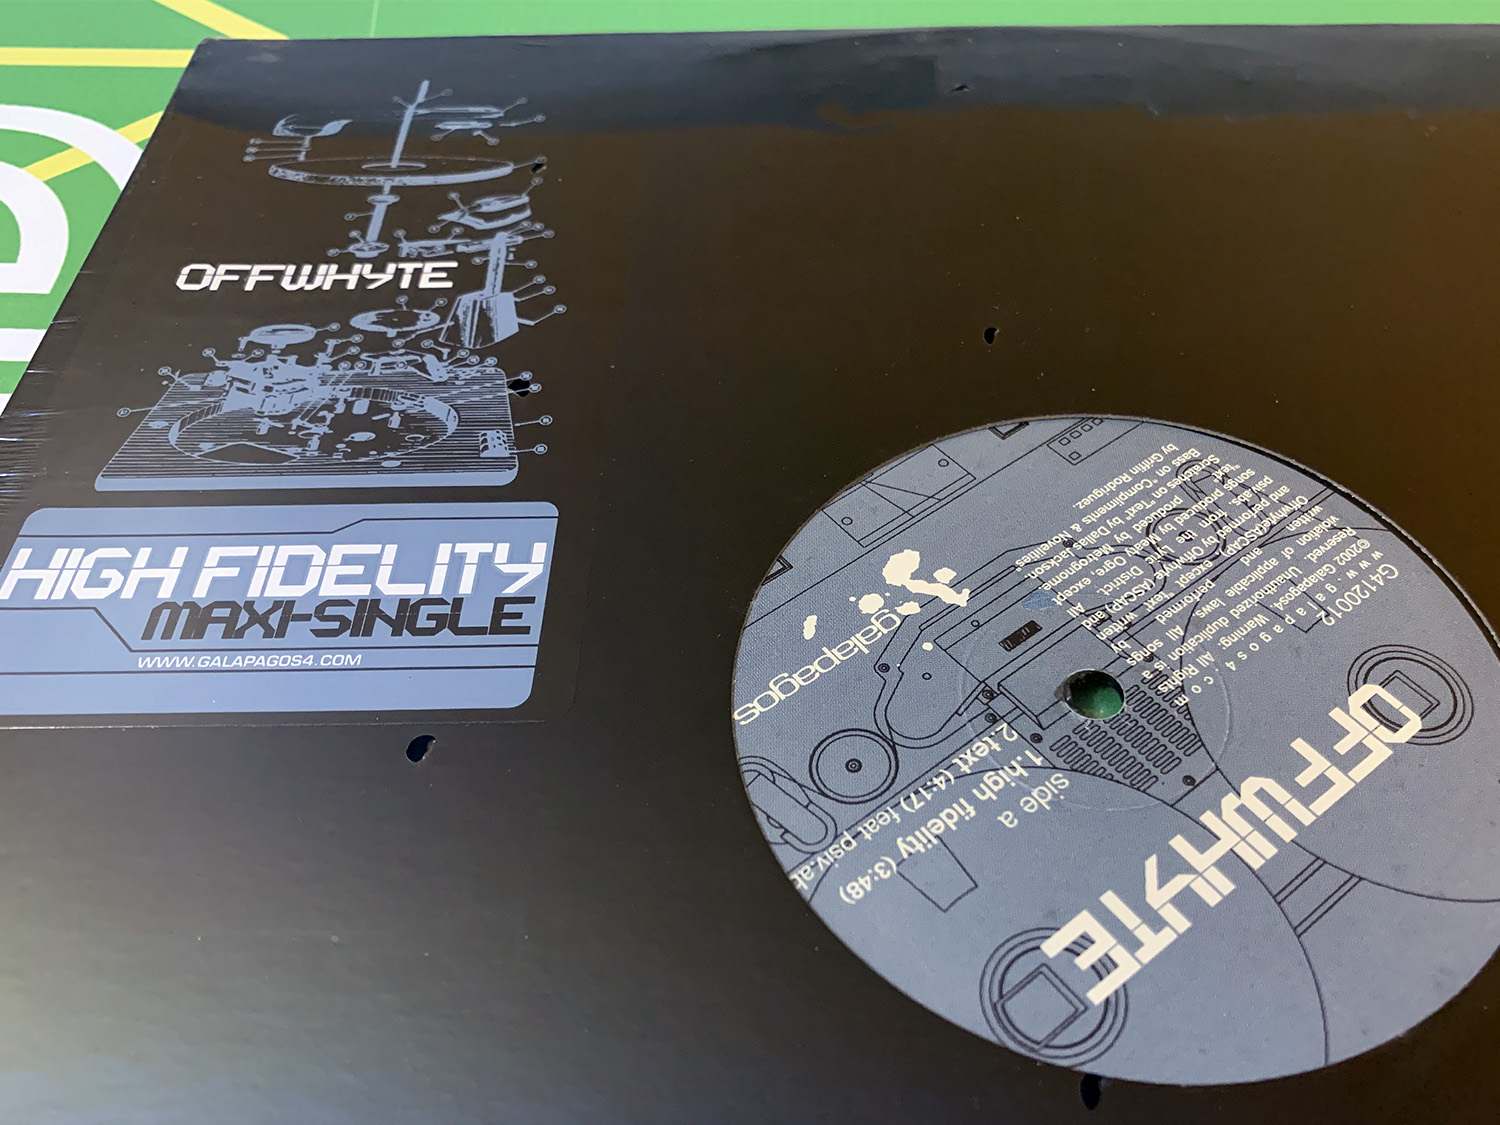 Offwhyte High Fidelity Maxi-Single 12-inch Vinyl